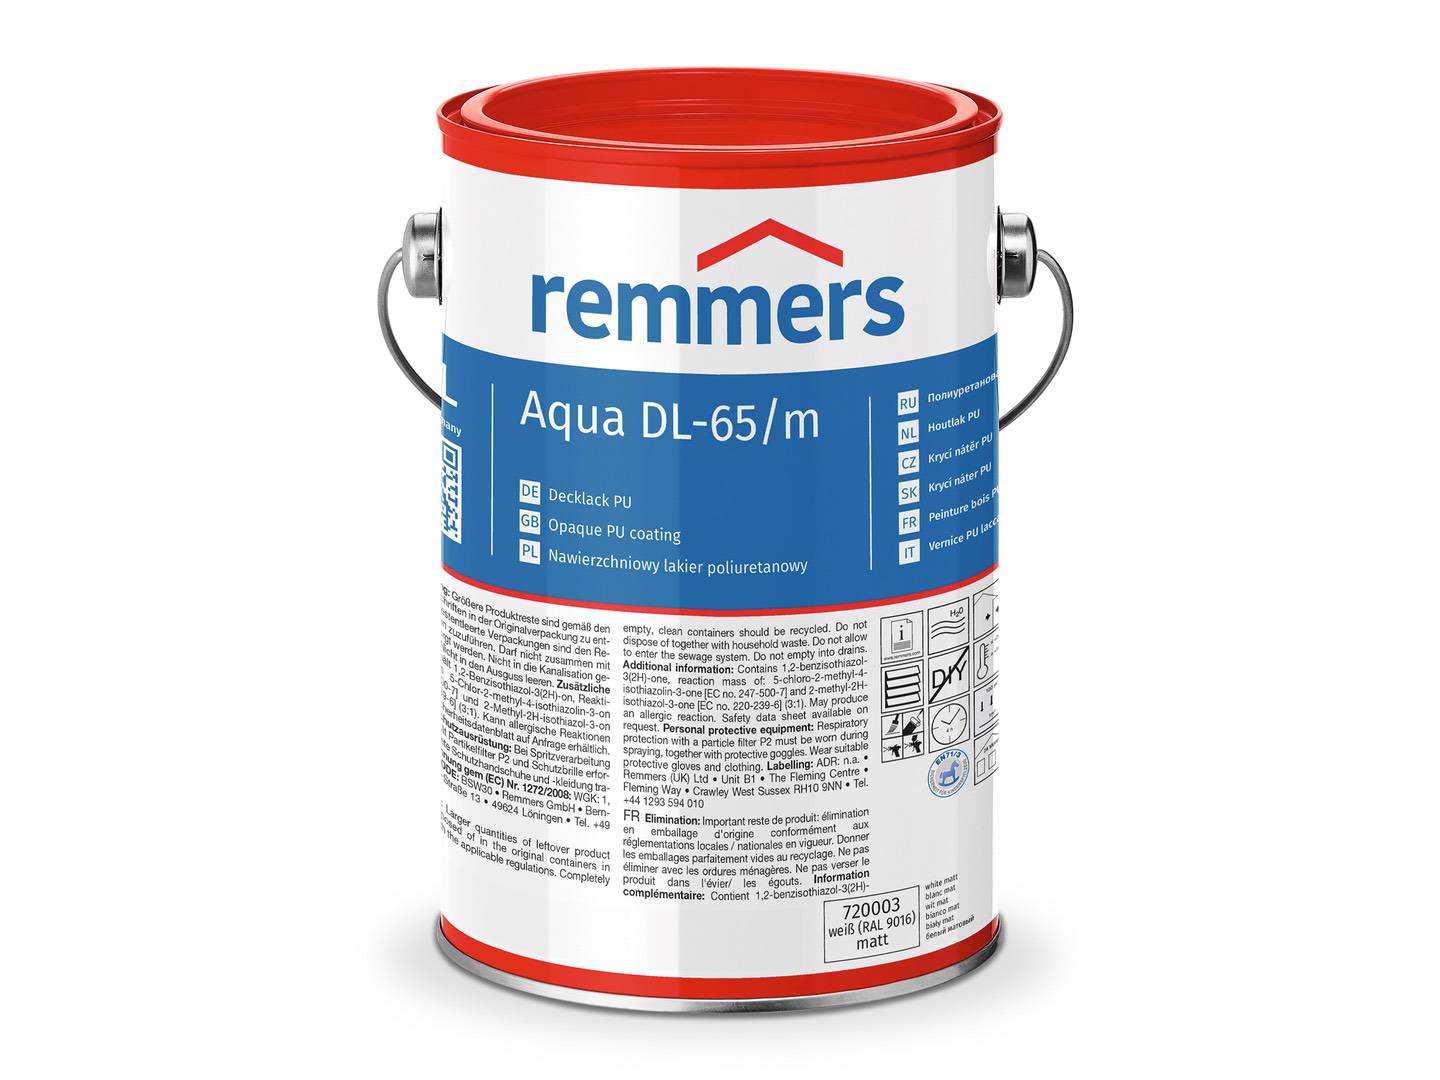 REMMERS Aqua DL-65-Decklack PU weiß (RAL 9016) seidenglänzend 2,50 l